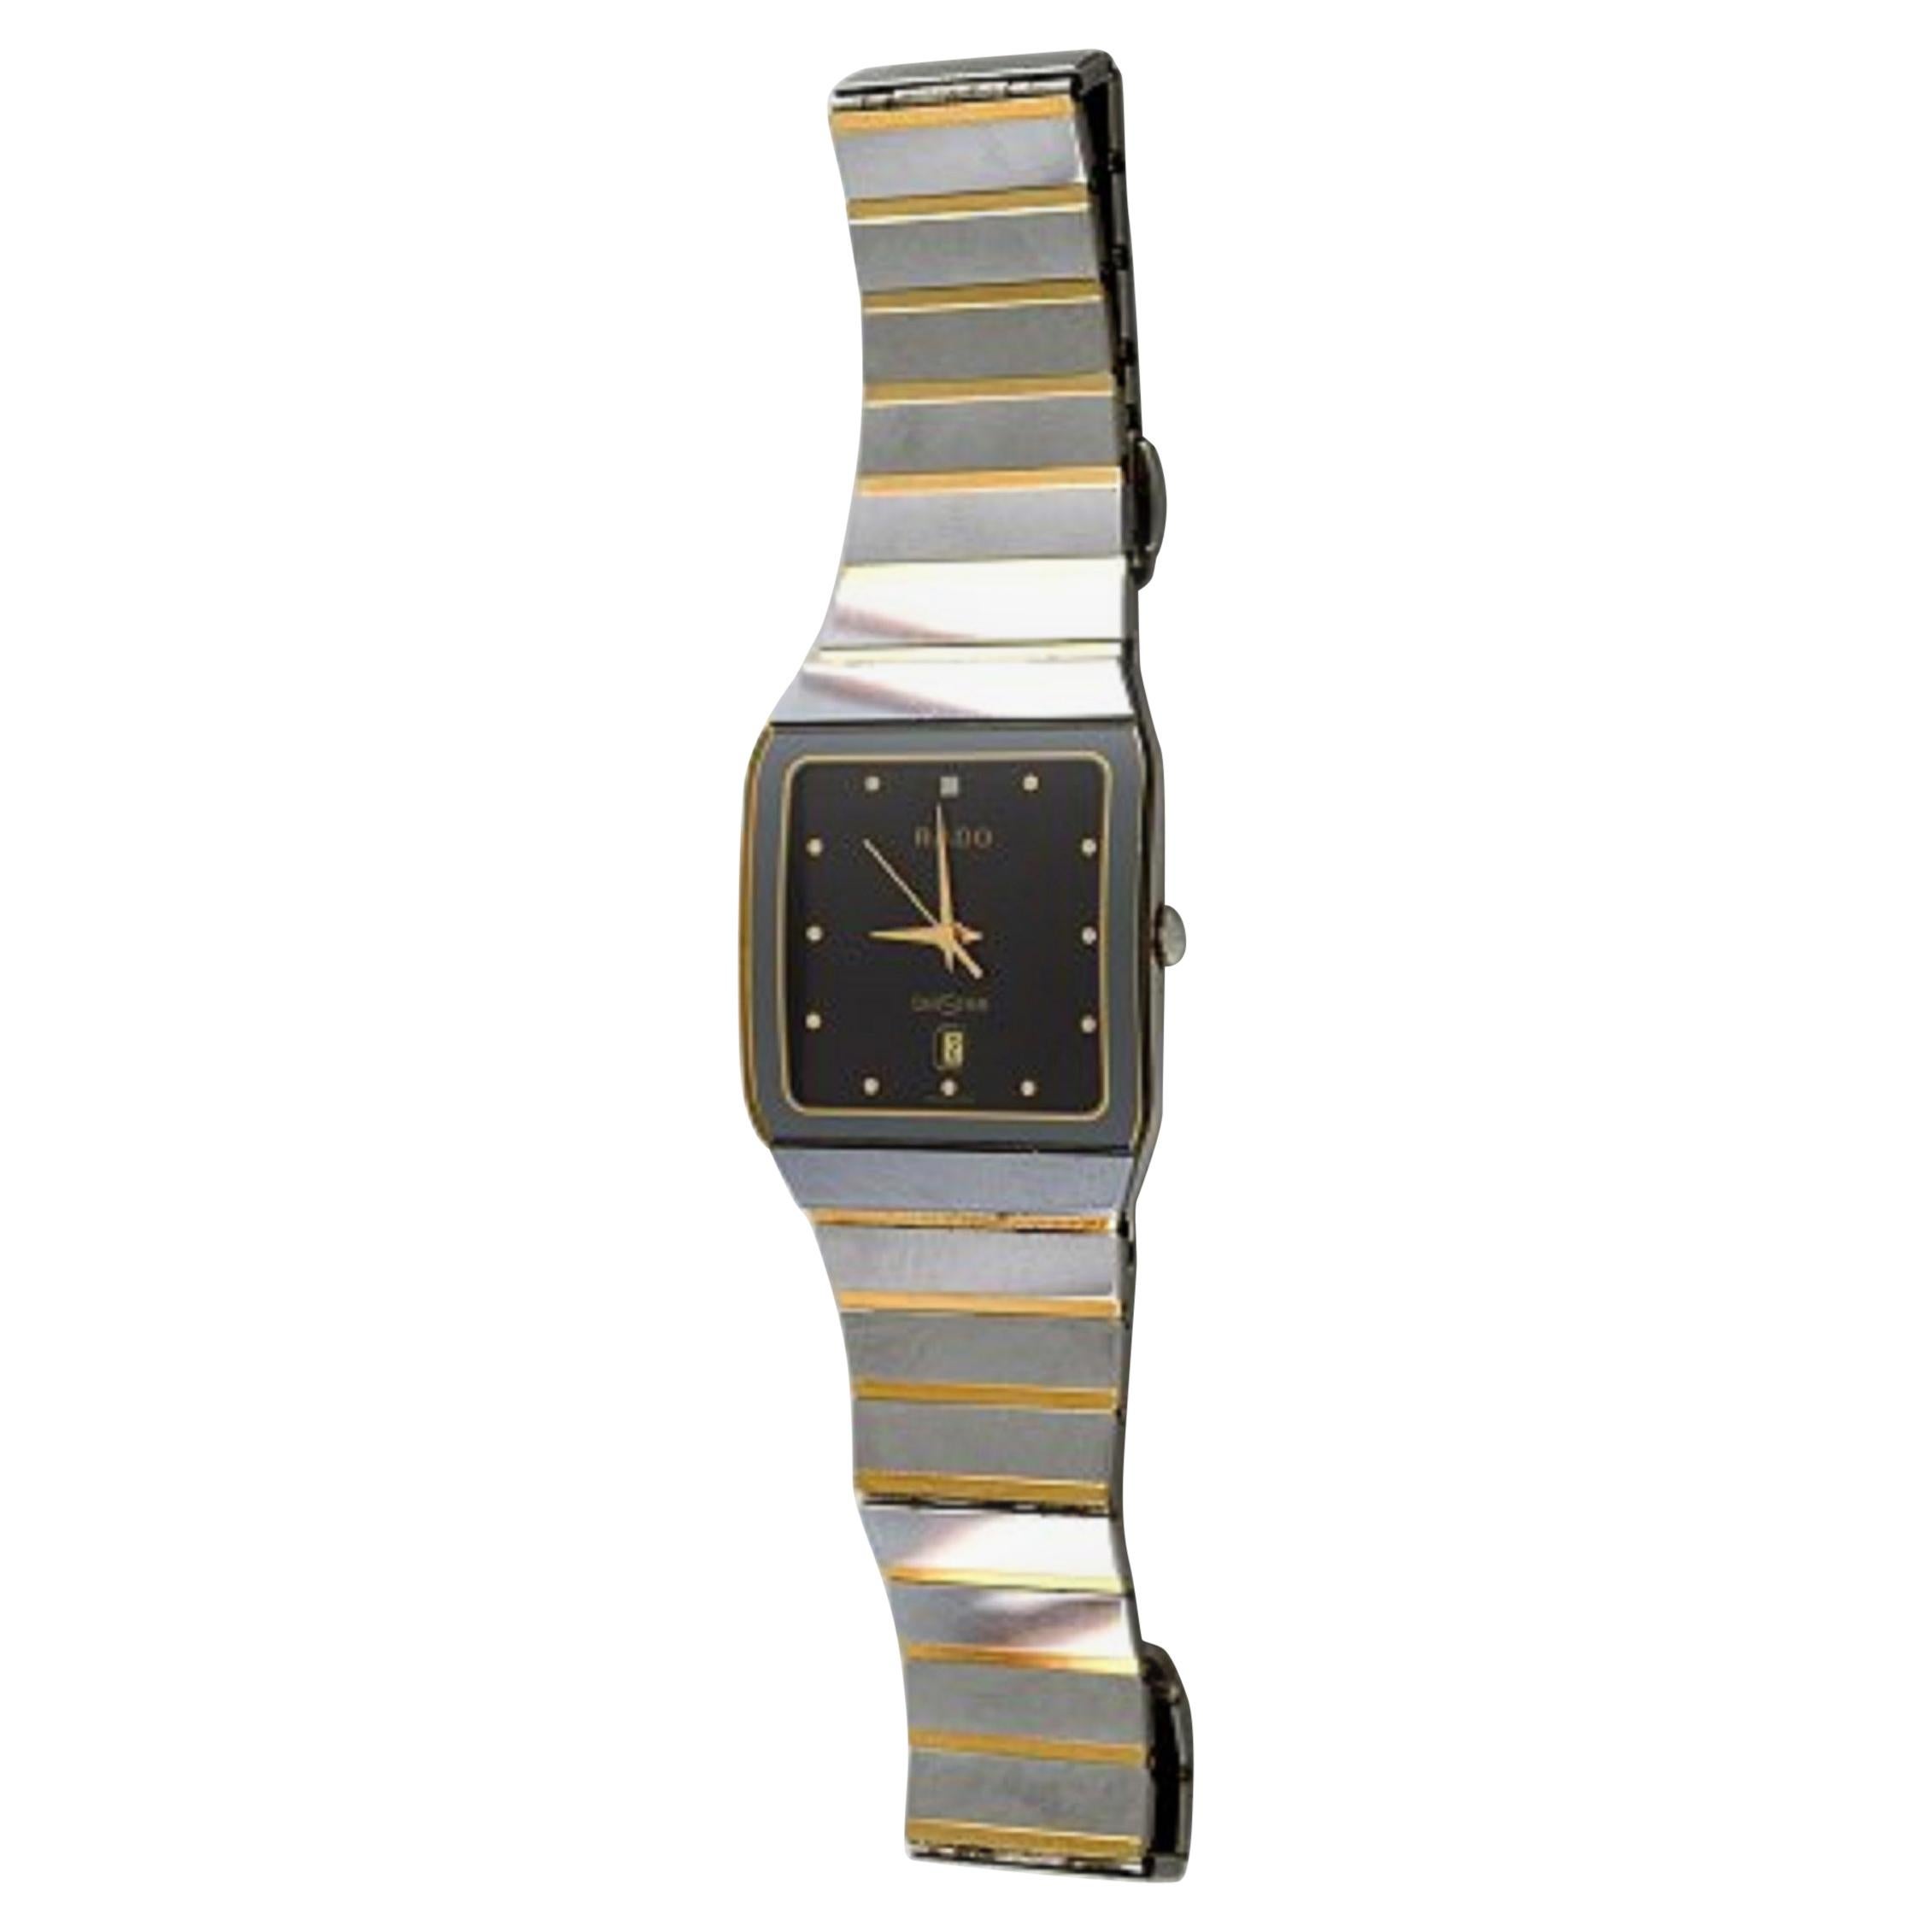 Rado Diastar-Uhr, 1980/90er Jahre, Stahl